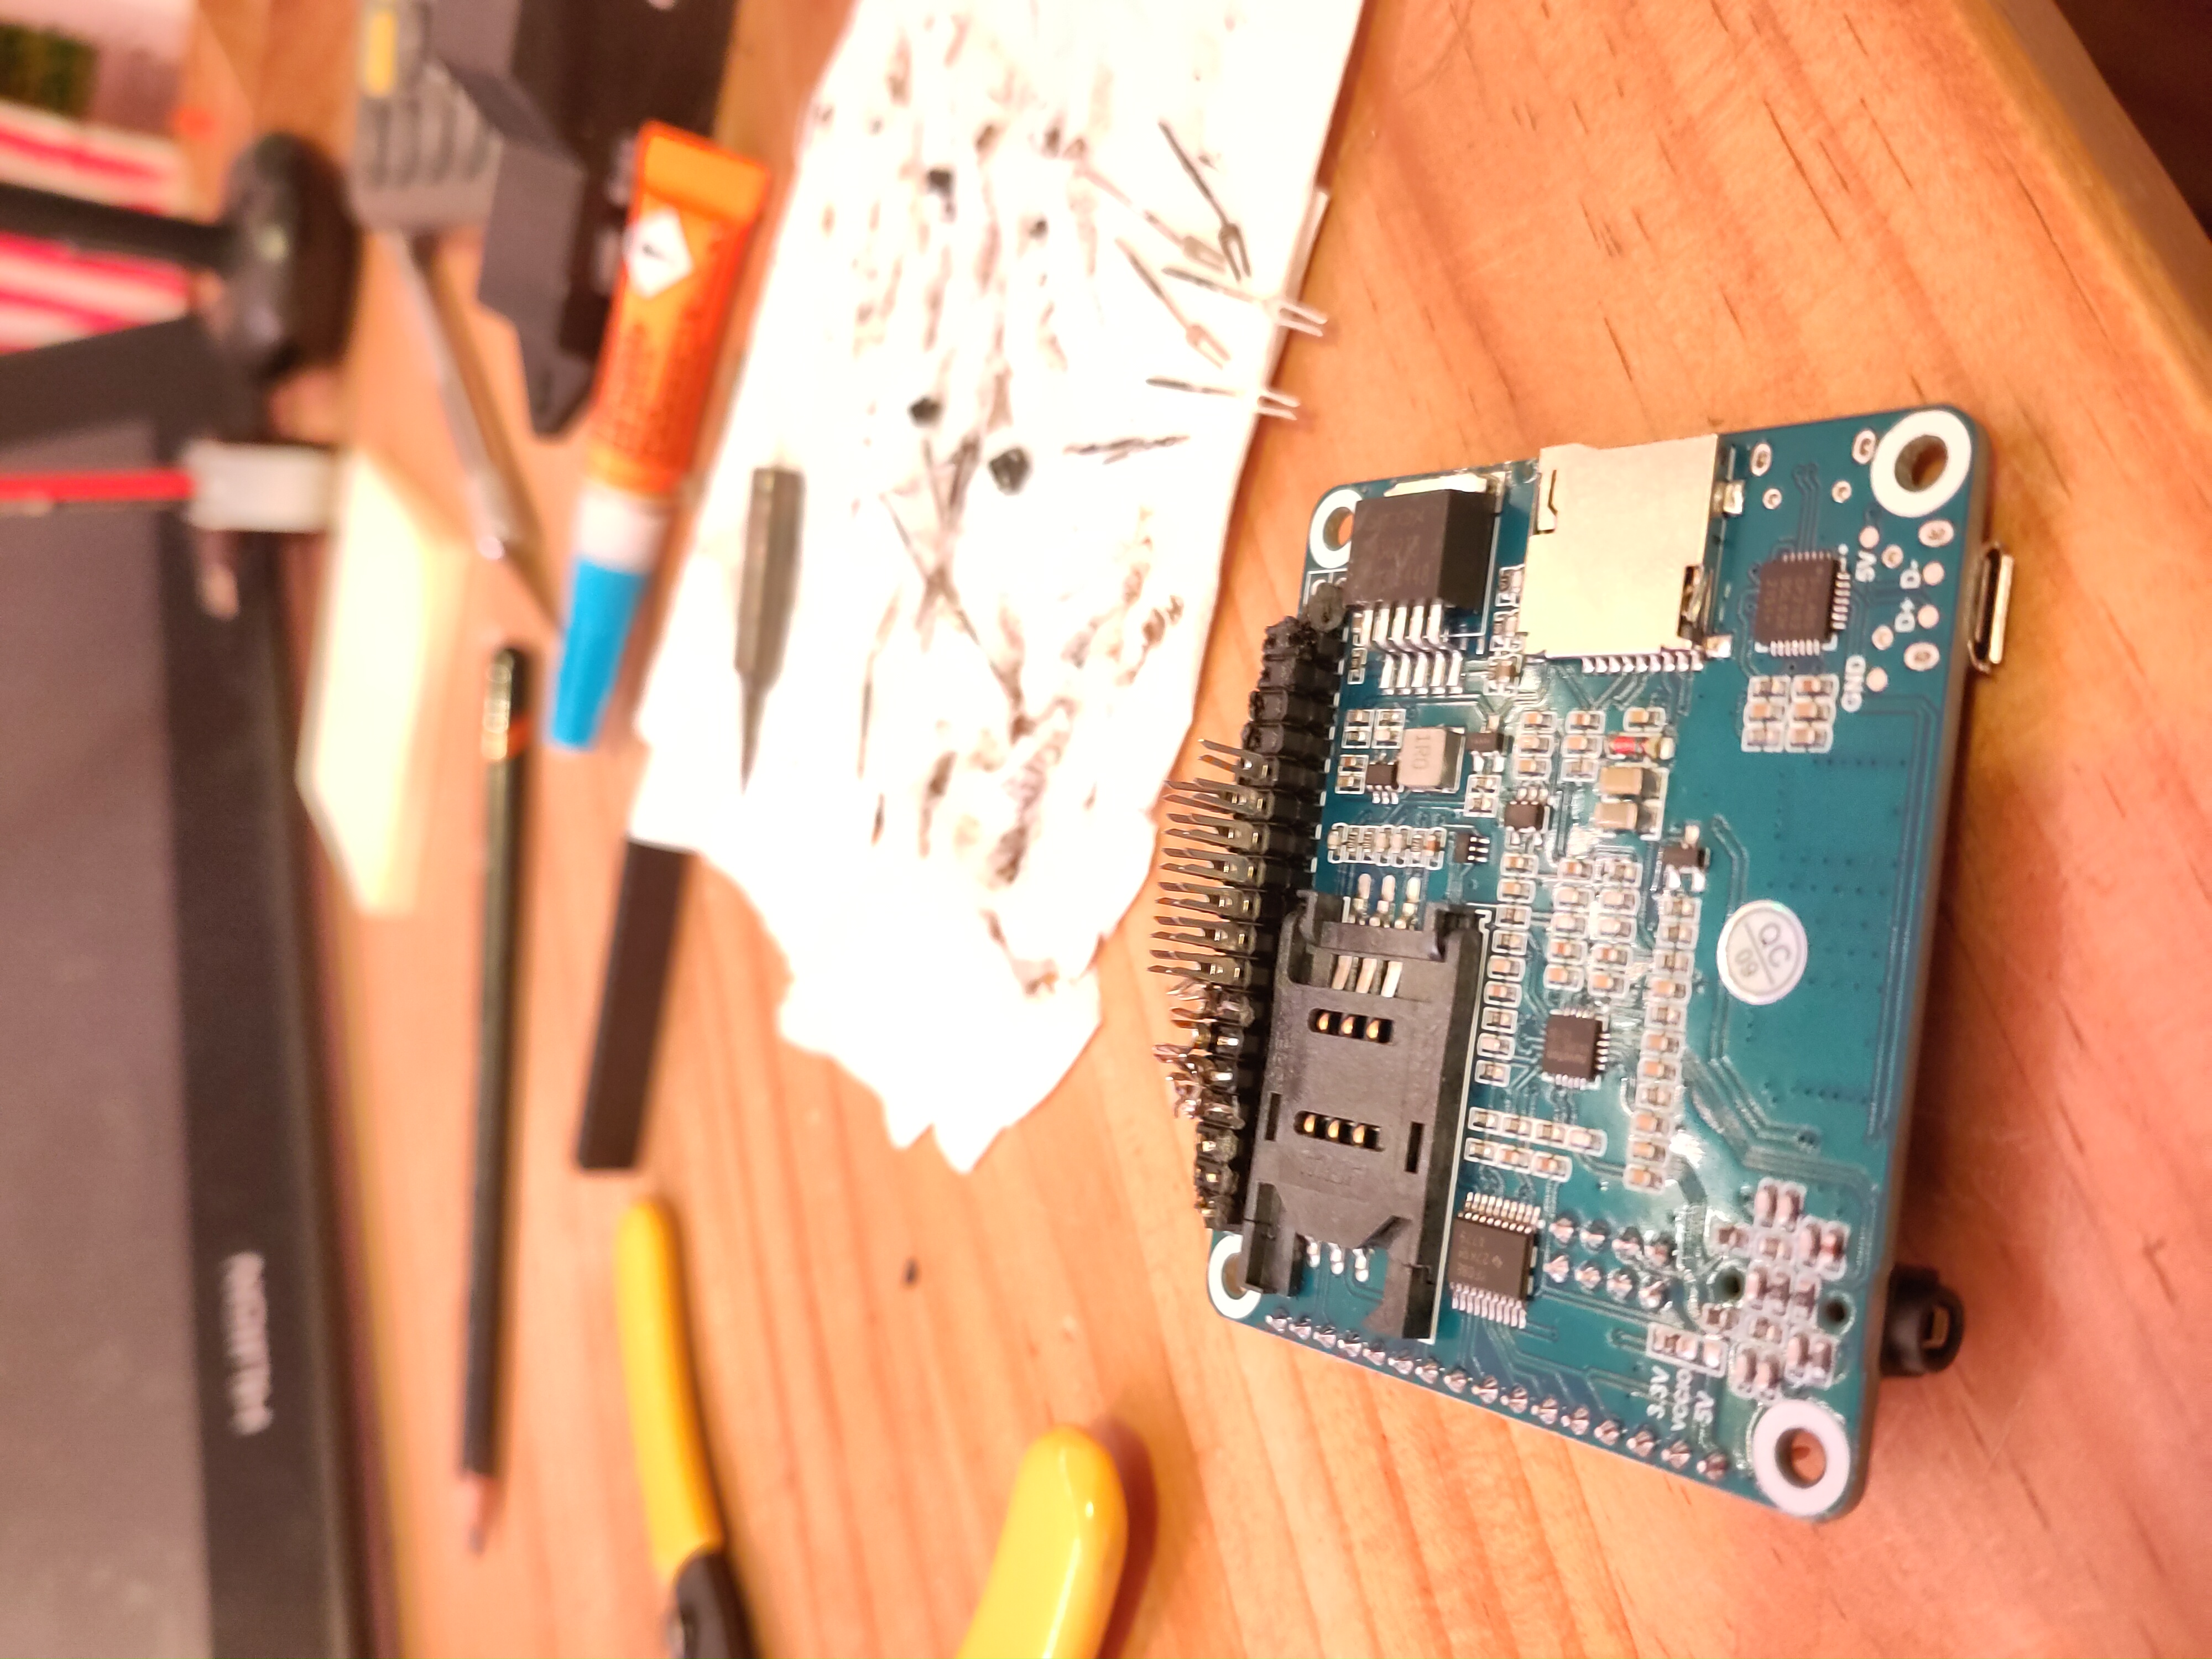 An image of a circuit board being taken apart